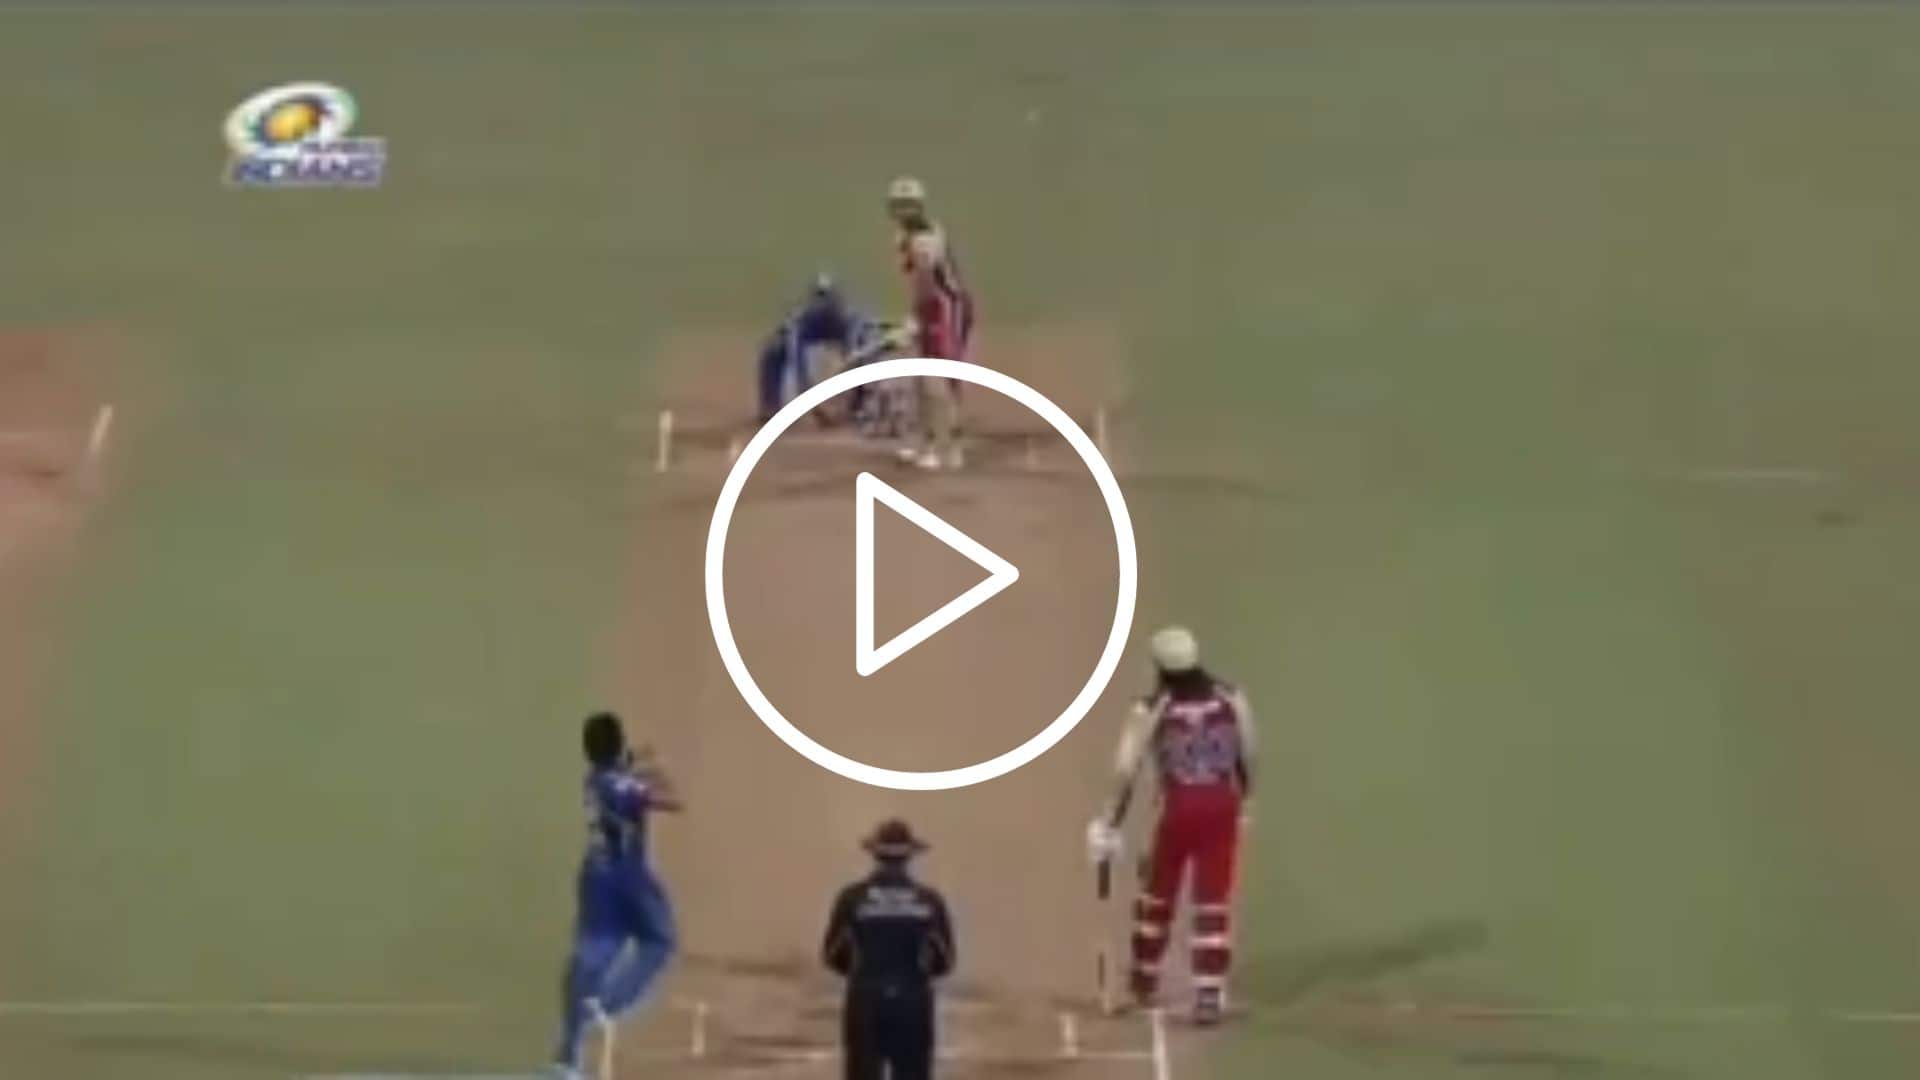 [Watch] When Virat Kohli Smashed Rohit Sharma For a Match-Winning Six During IPL 2012